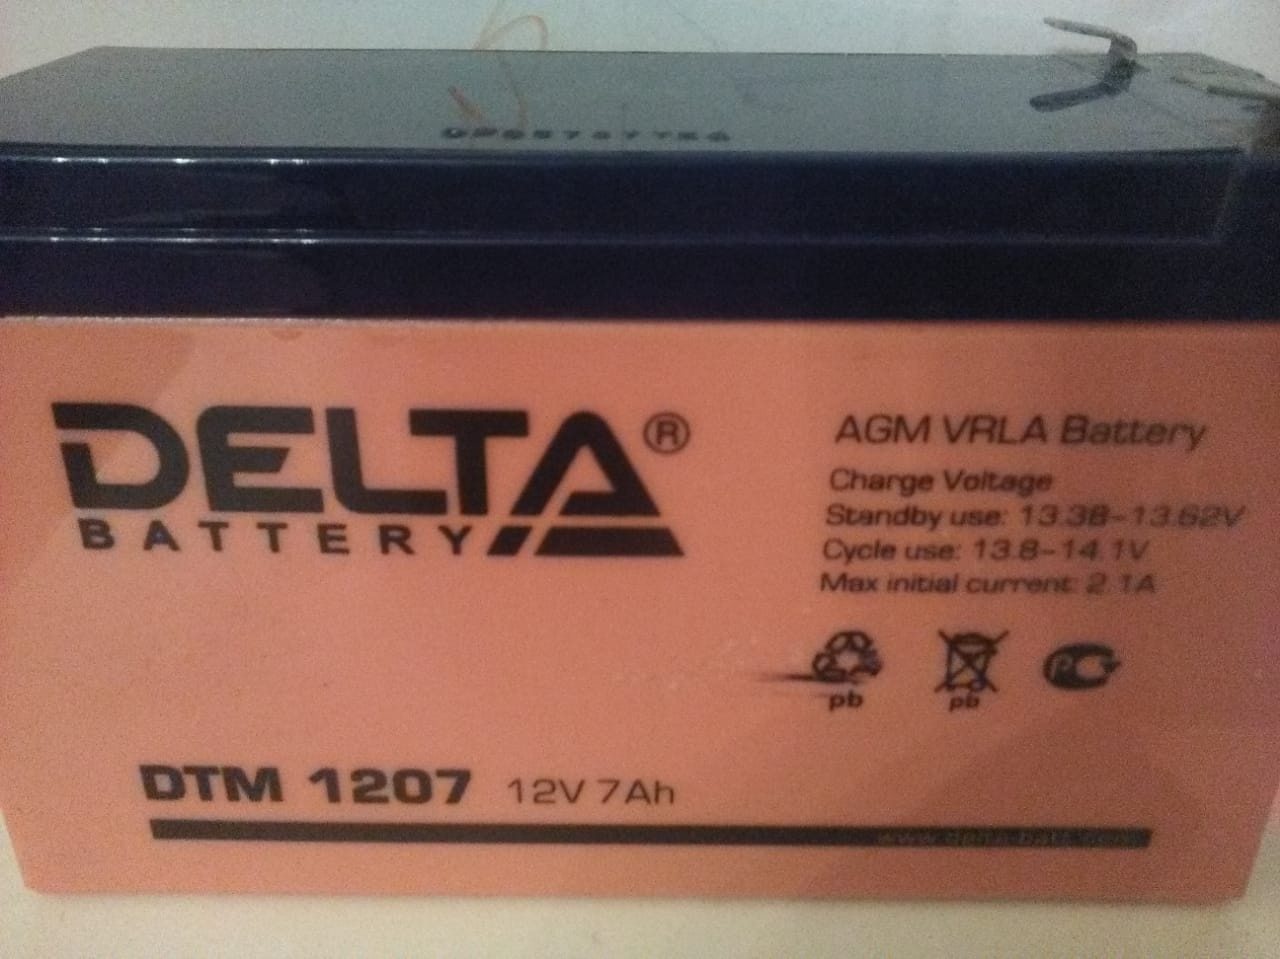 Аккумулятор 1207 12v 7ah. Аккумуляторная батарея Delta DT 12100 (12v / 100ah). Дельта аккумулятор 12v 7ah. Батарея Delta DT 1207 (12v, 7ah) <DT 1207>. Delta DTM 1207 12v.